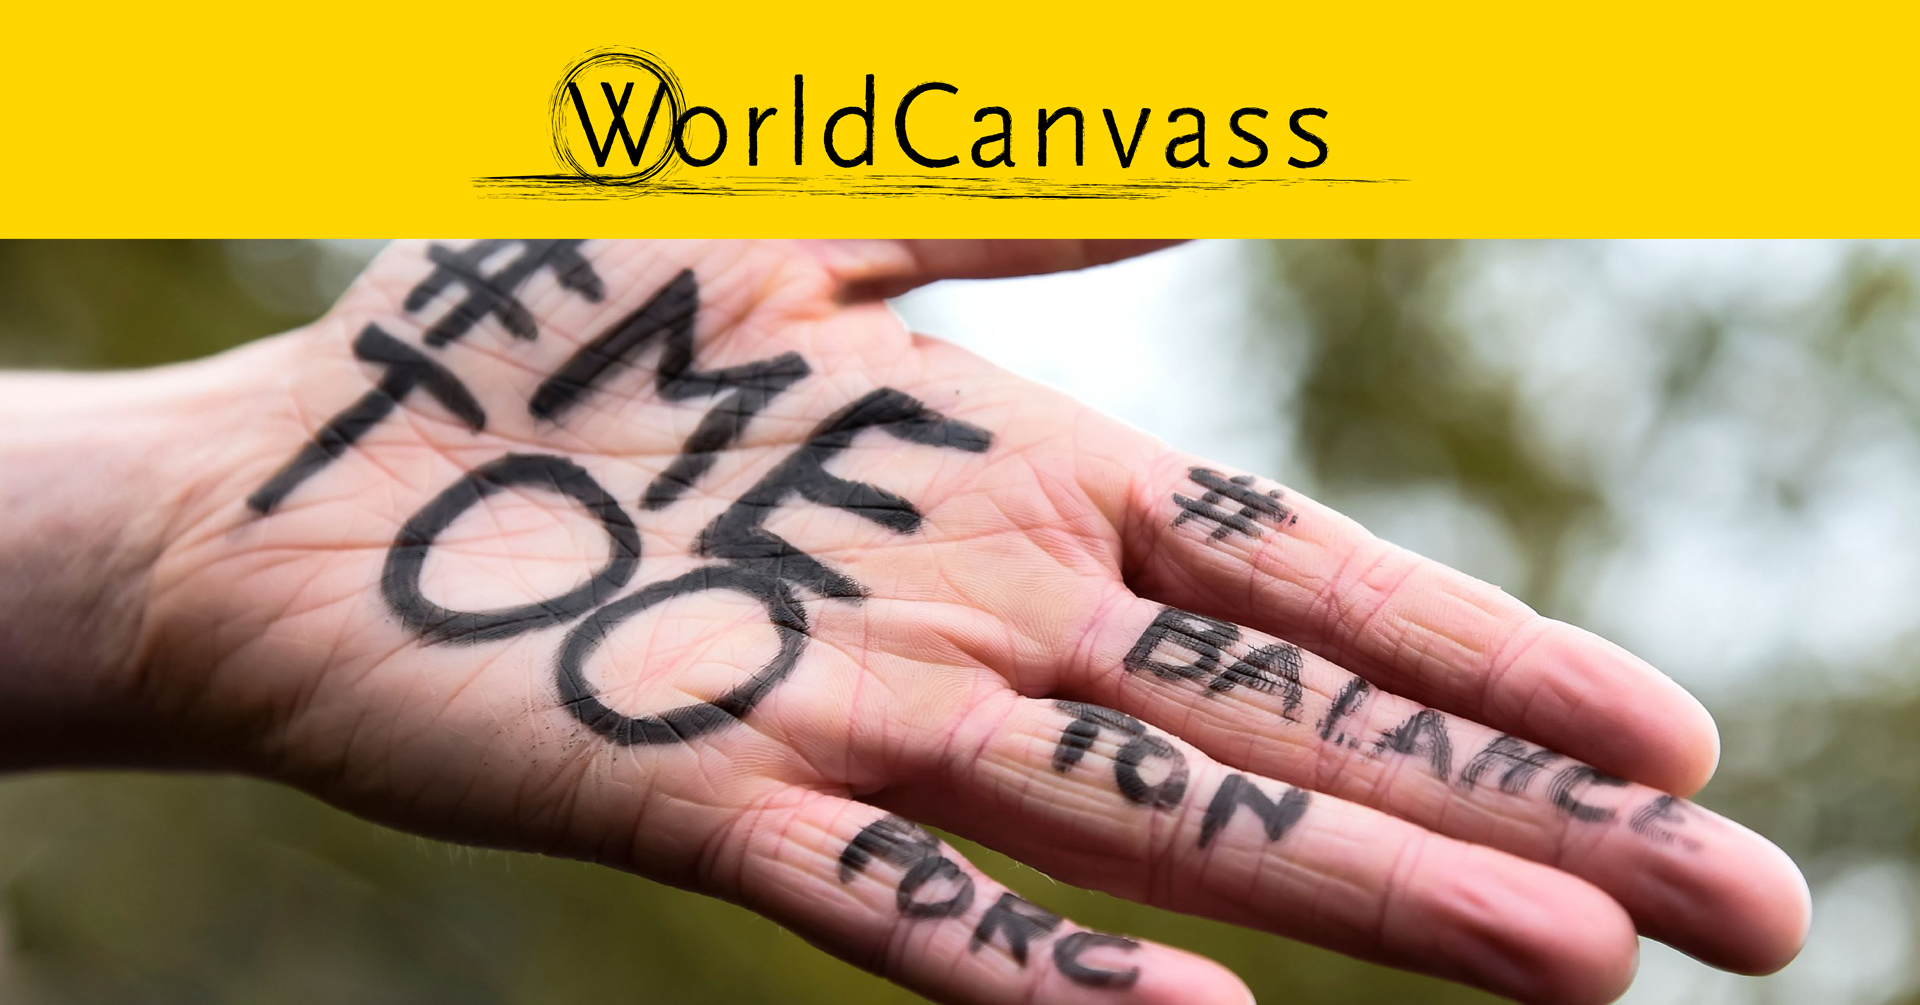 WorldCanvass hand with #Metoo written on it